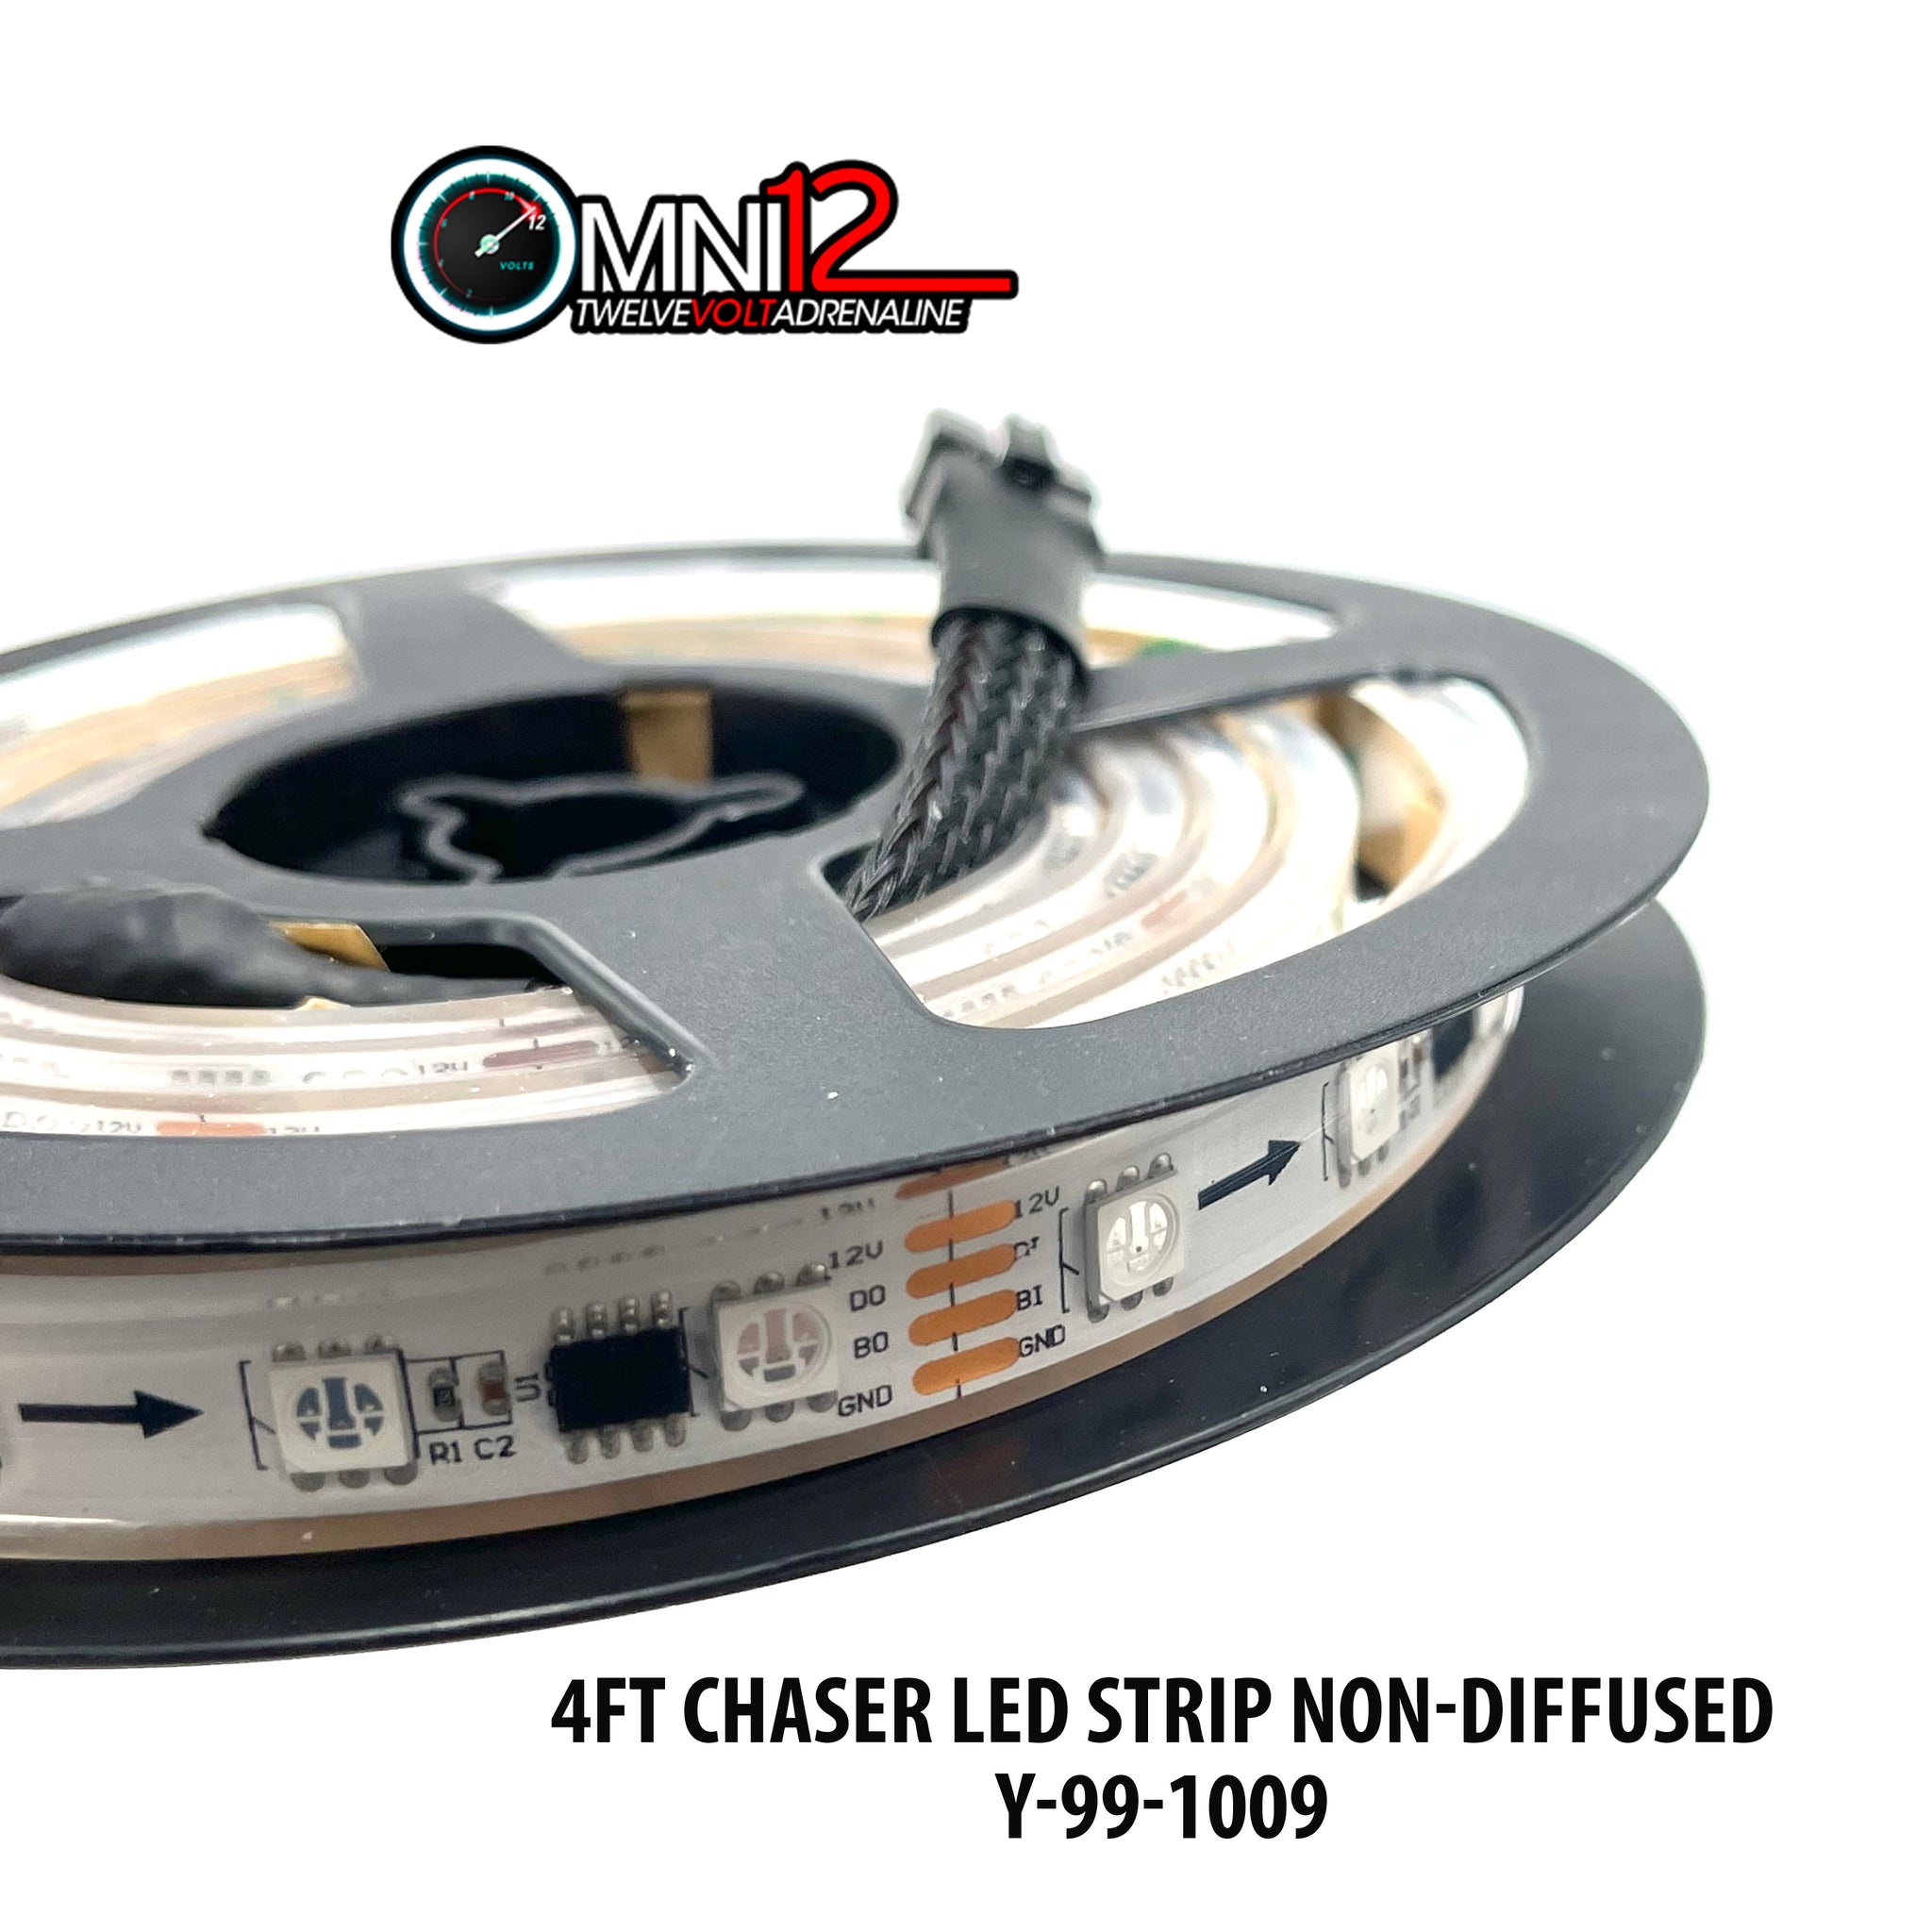 Chaser LED Strips 1 to 4FT